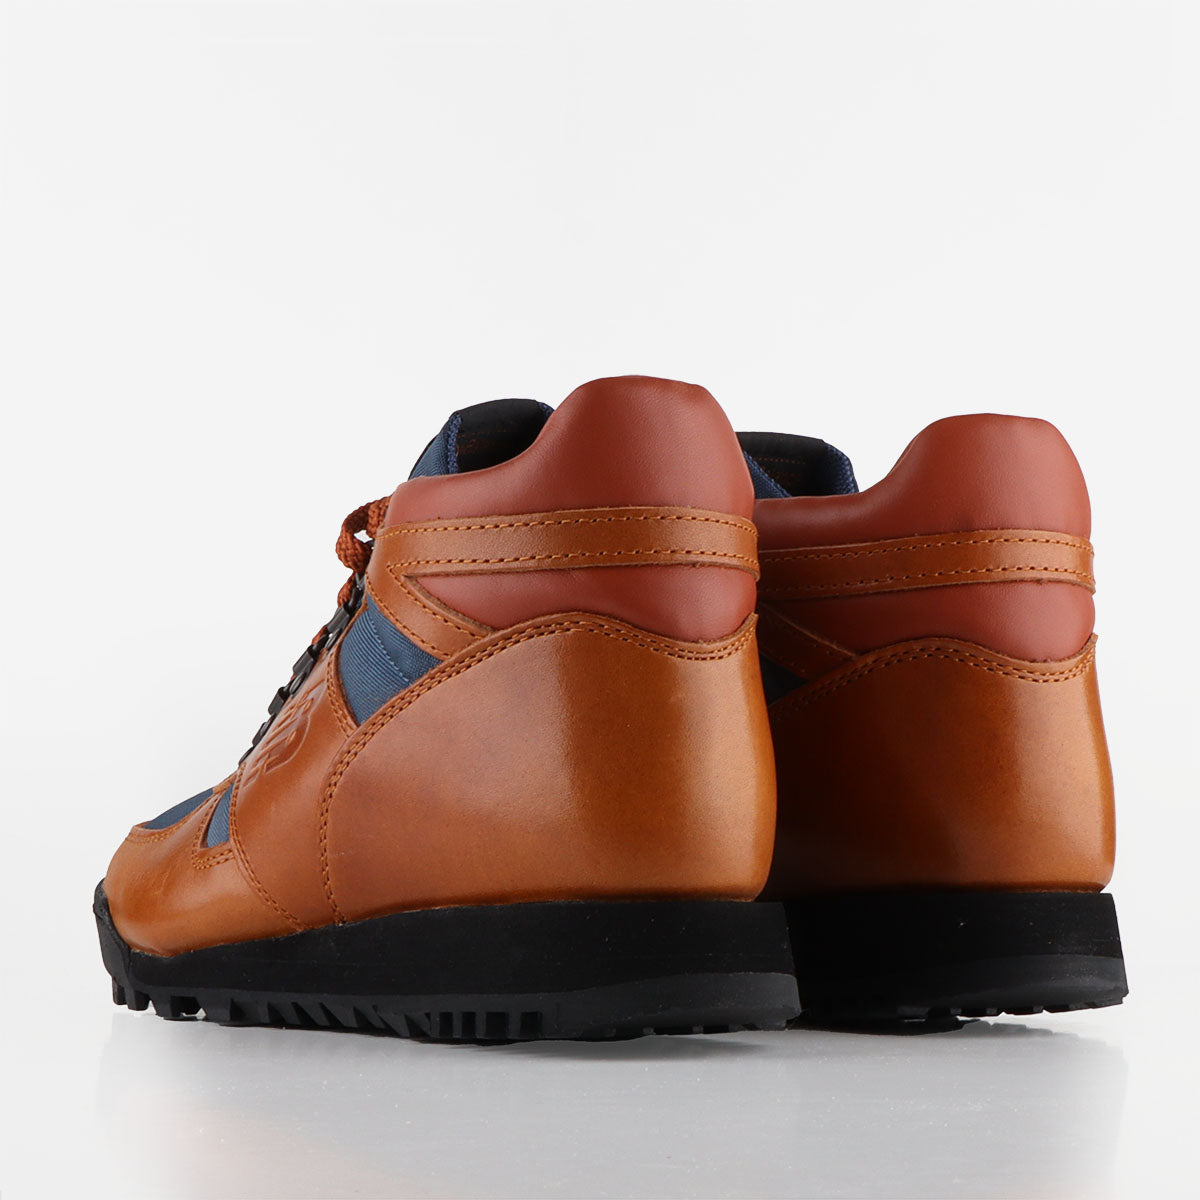 New Balance Rainier OG Shoes, Brown, Detail Shot 3